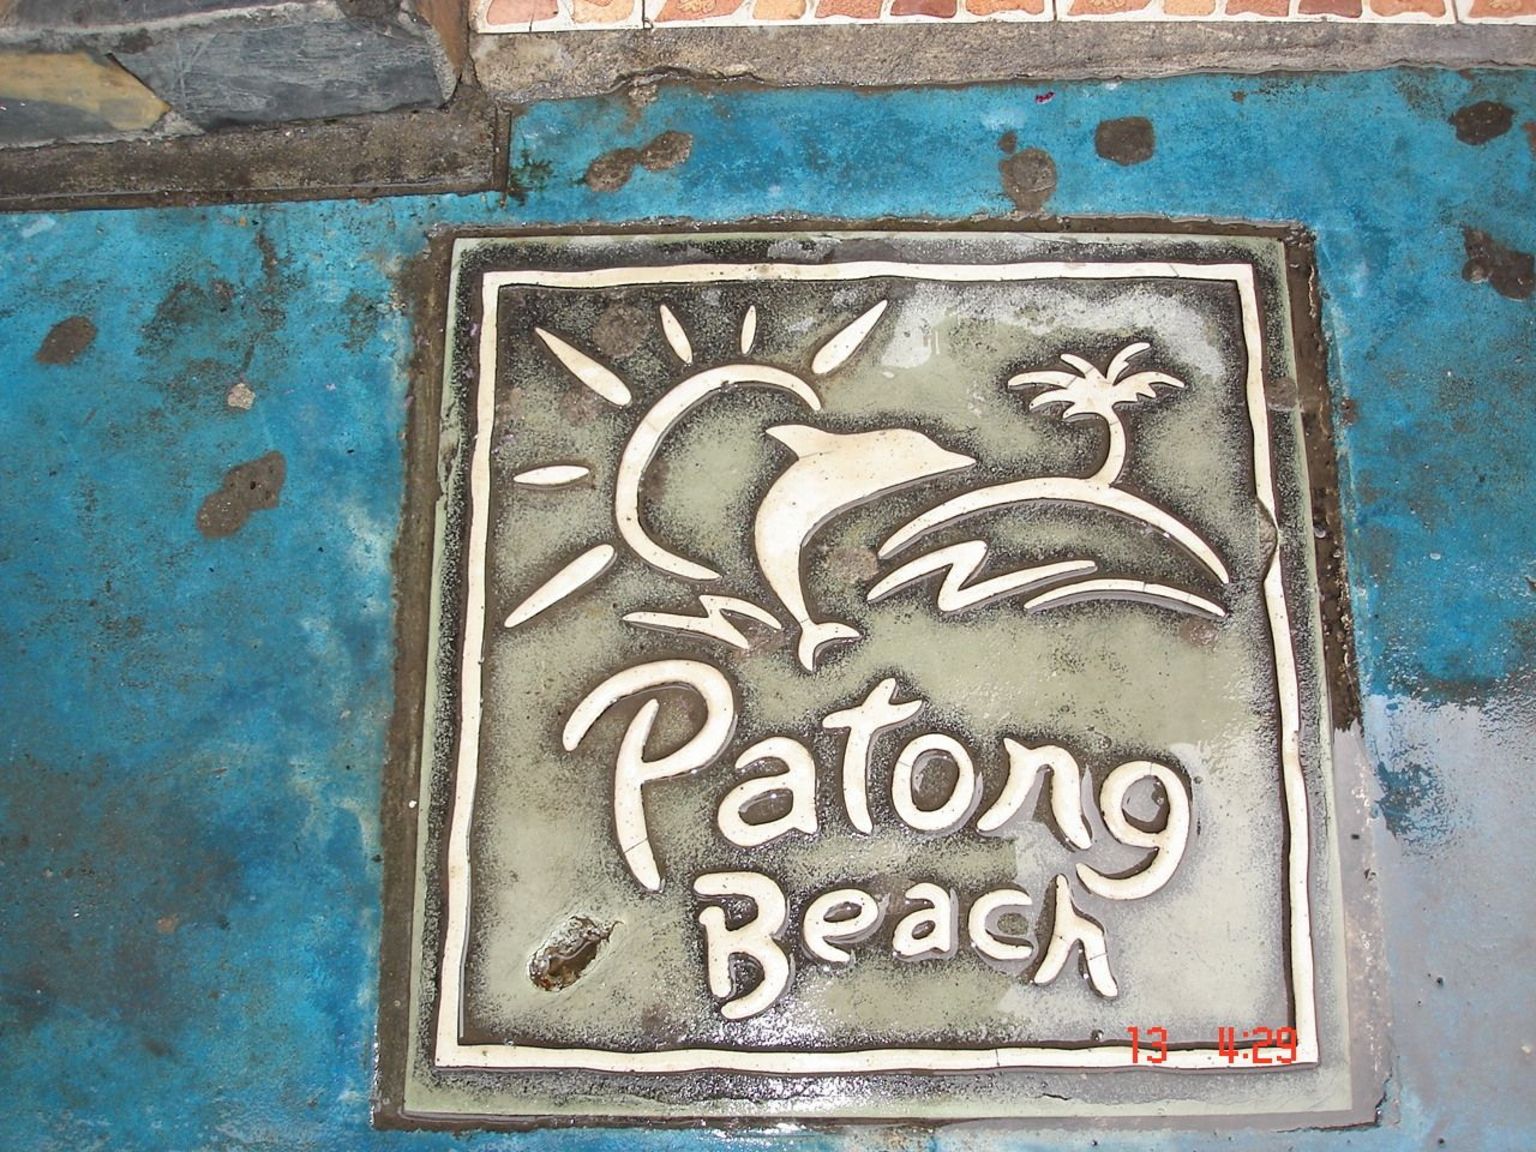 Patong Beach was written on every few metres